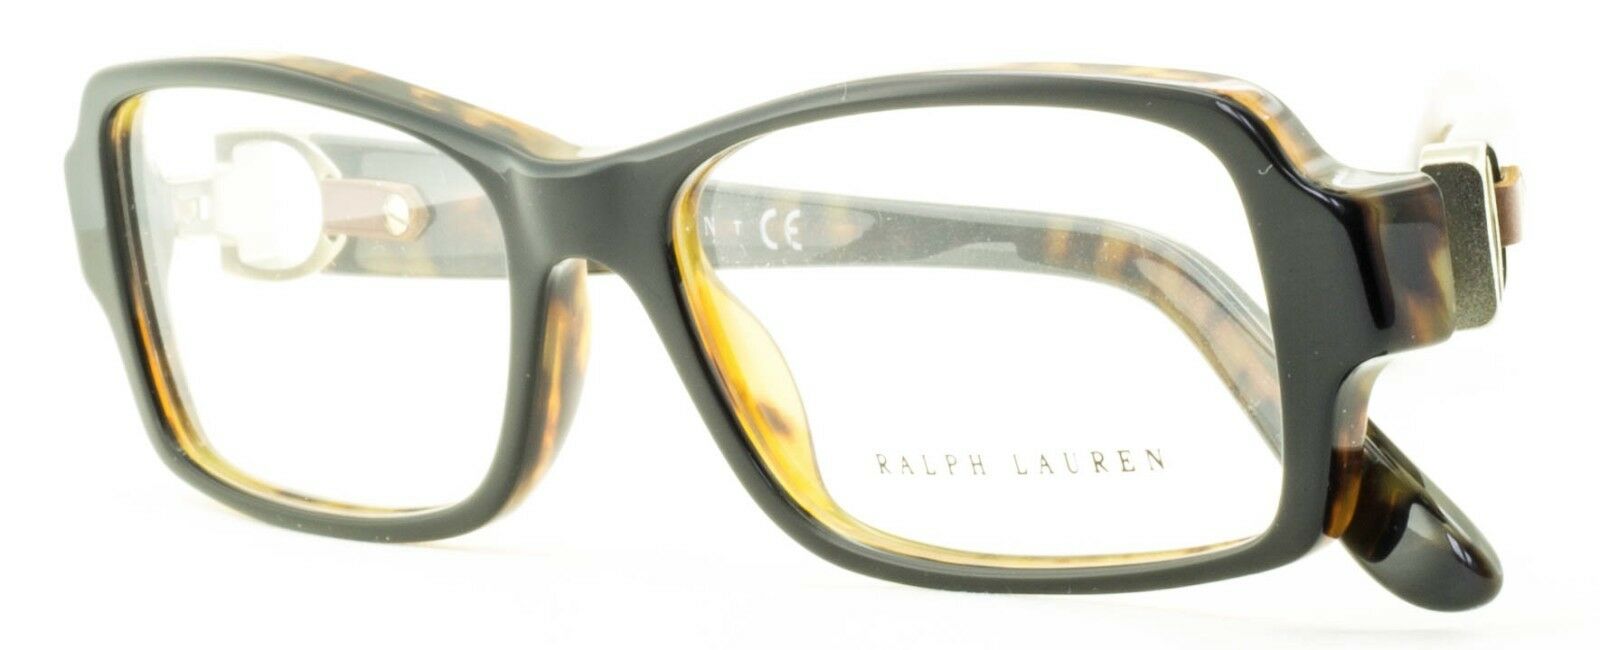 RALPH LAUREN RL 6107Q 5260 Eyewear FRAMES RX Optical Glasses Eyeglasses -TRUSTED